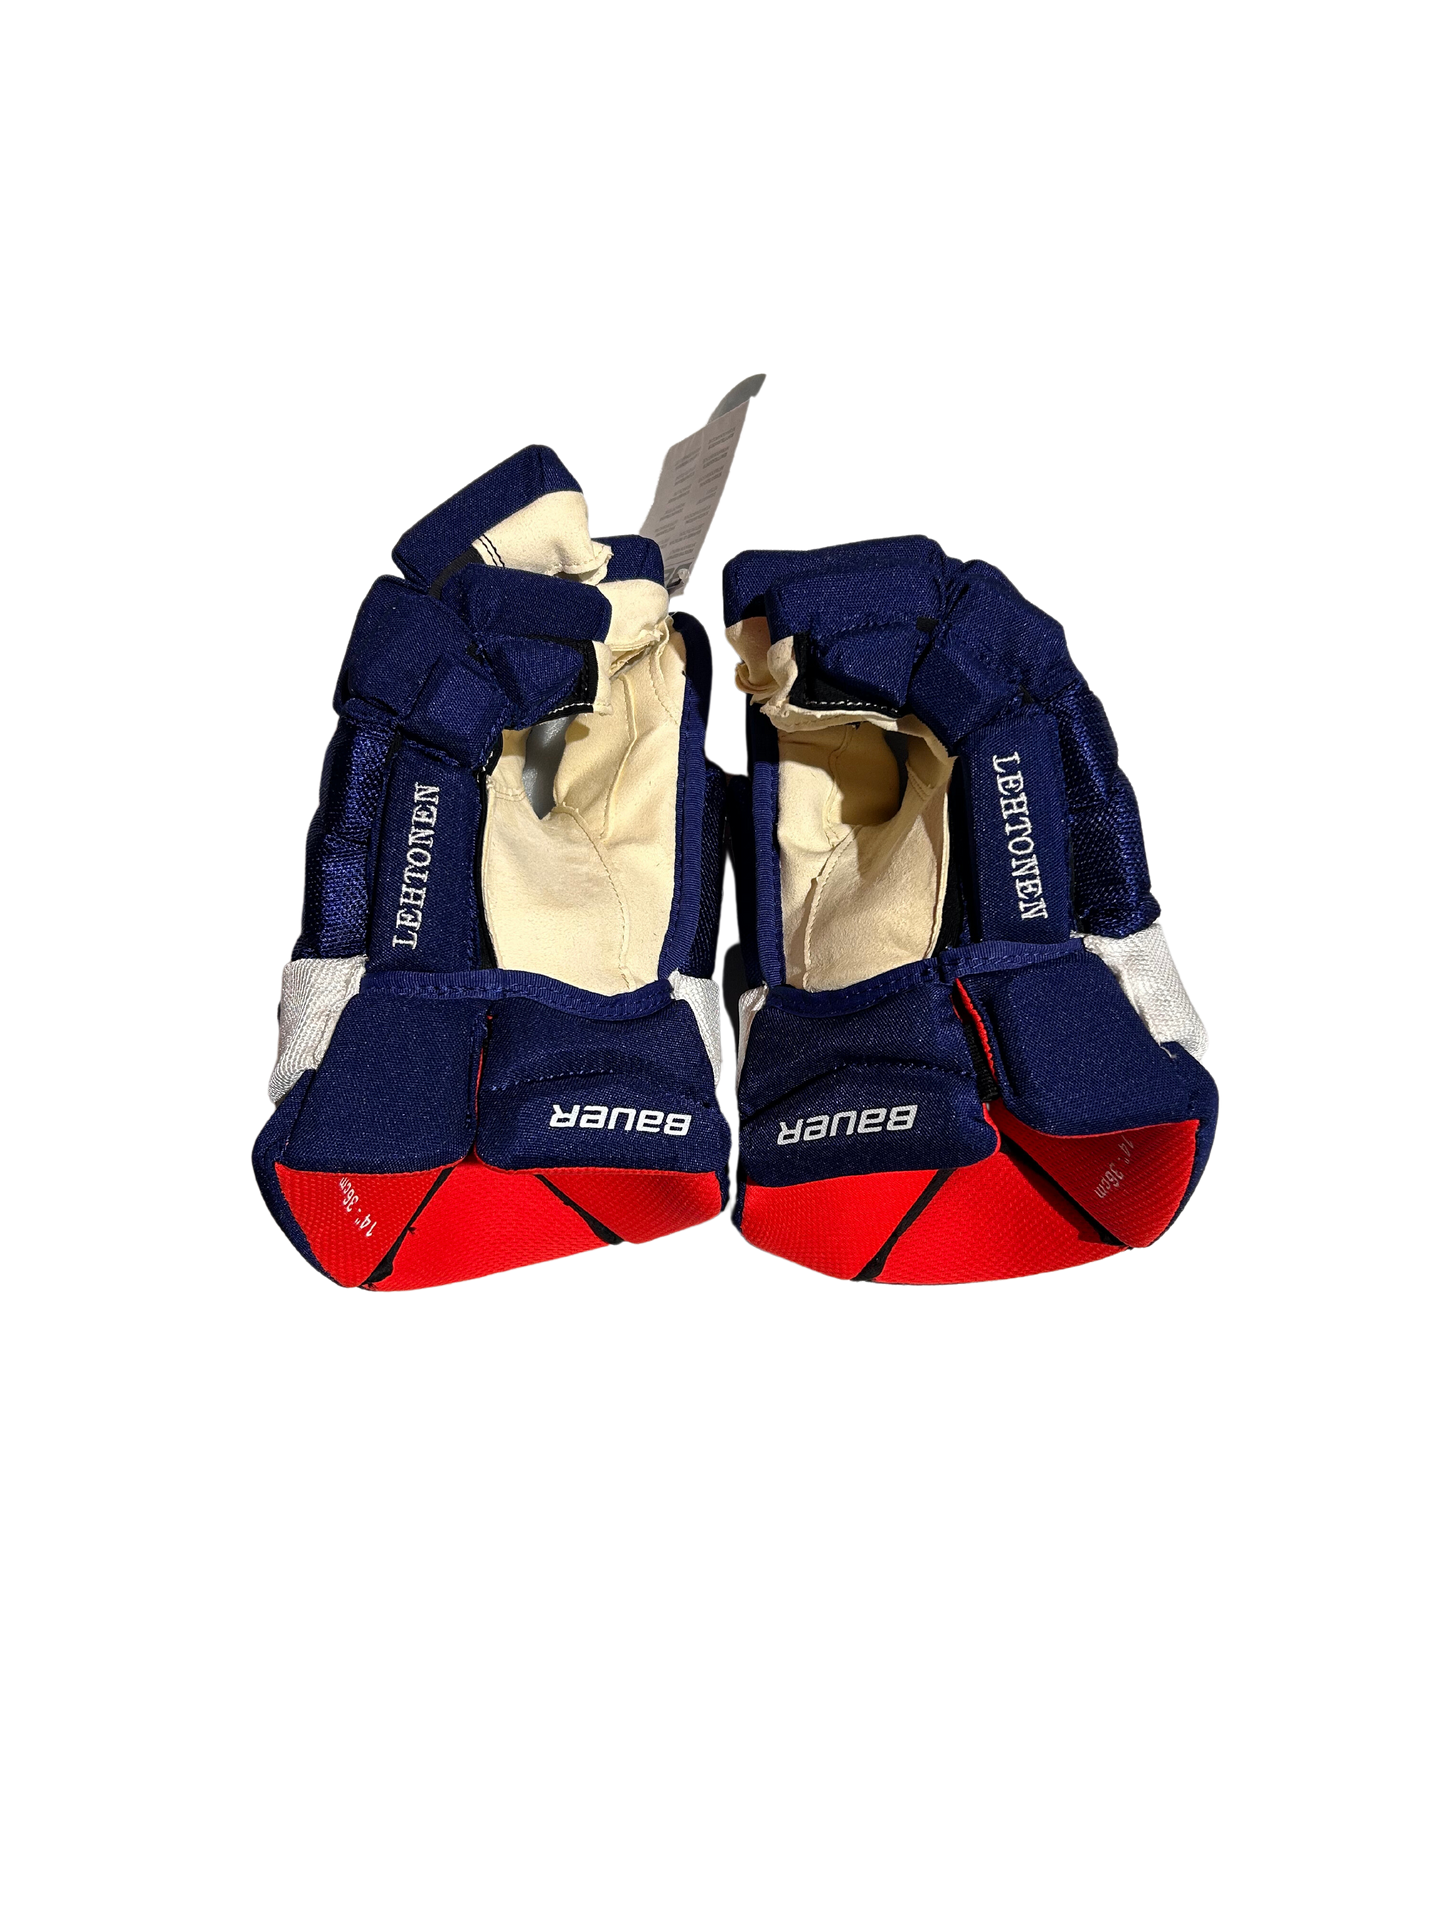 New Lehtonen Toronto Maple Leafs 14" Bauer Vapor X Gloves